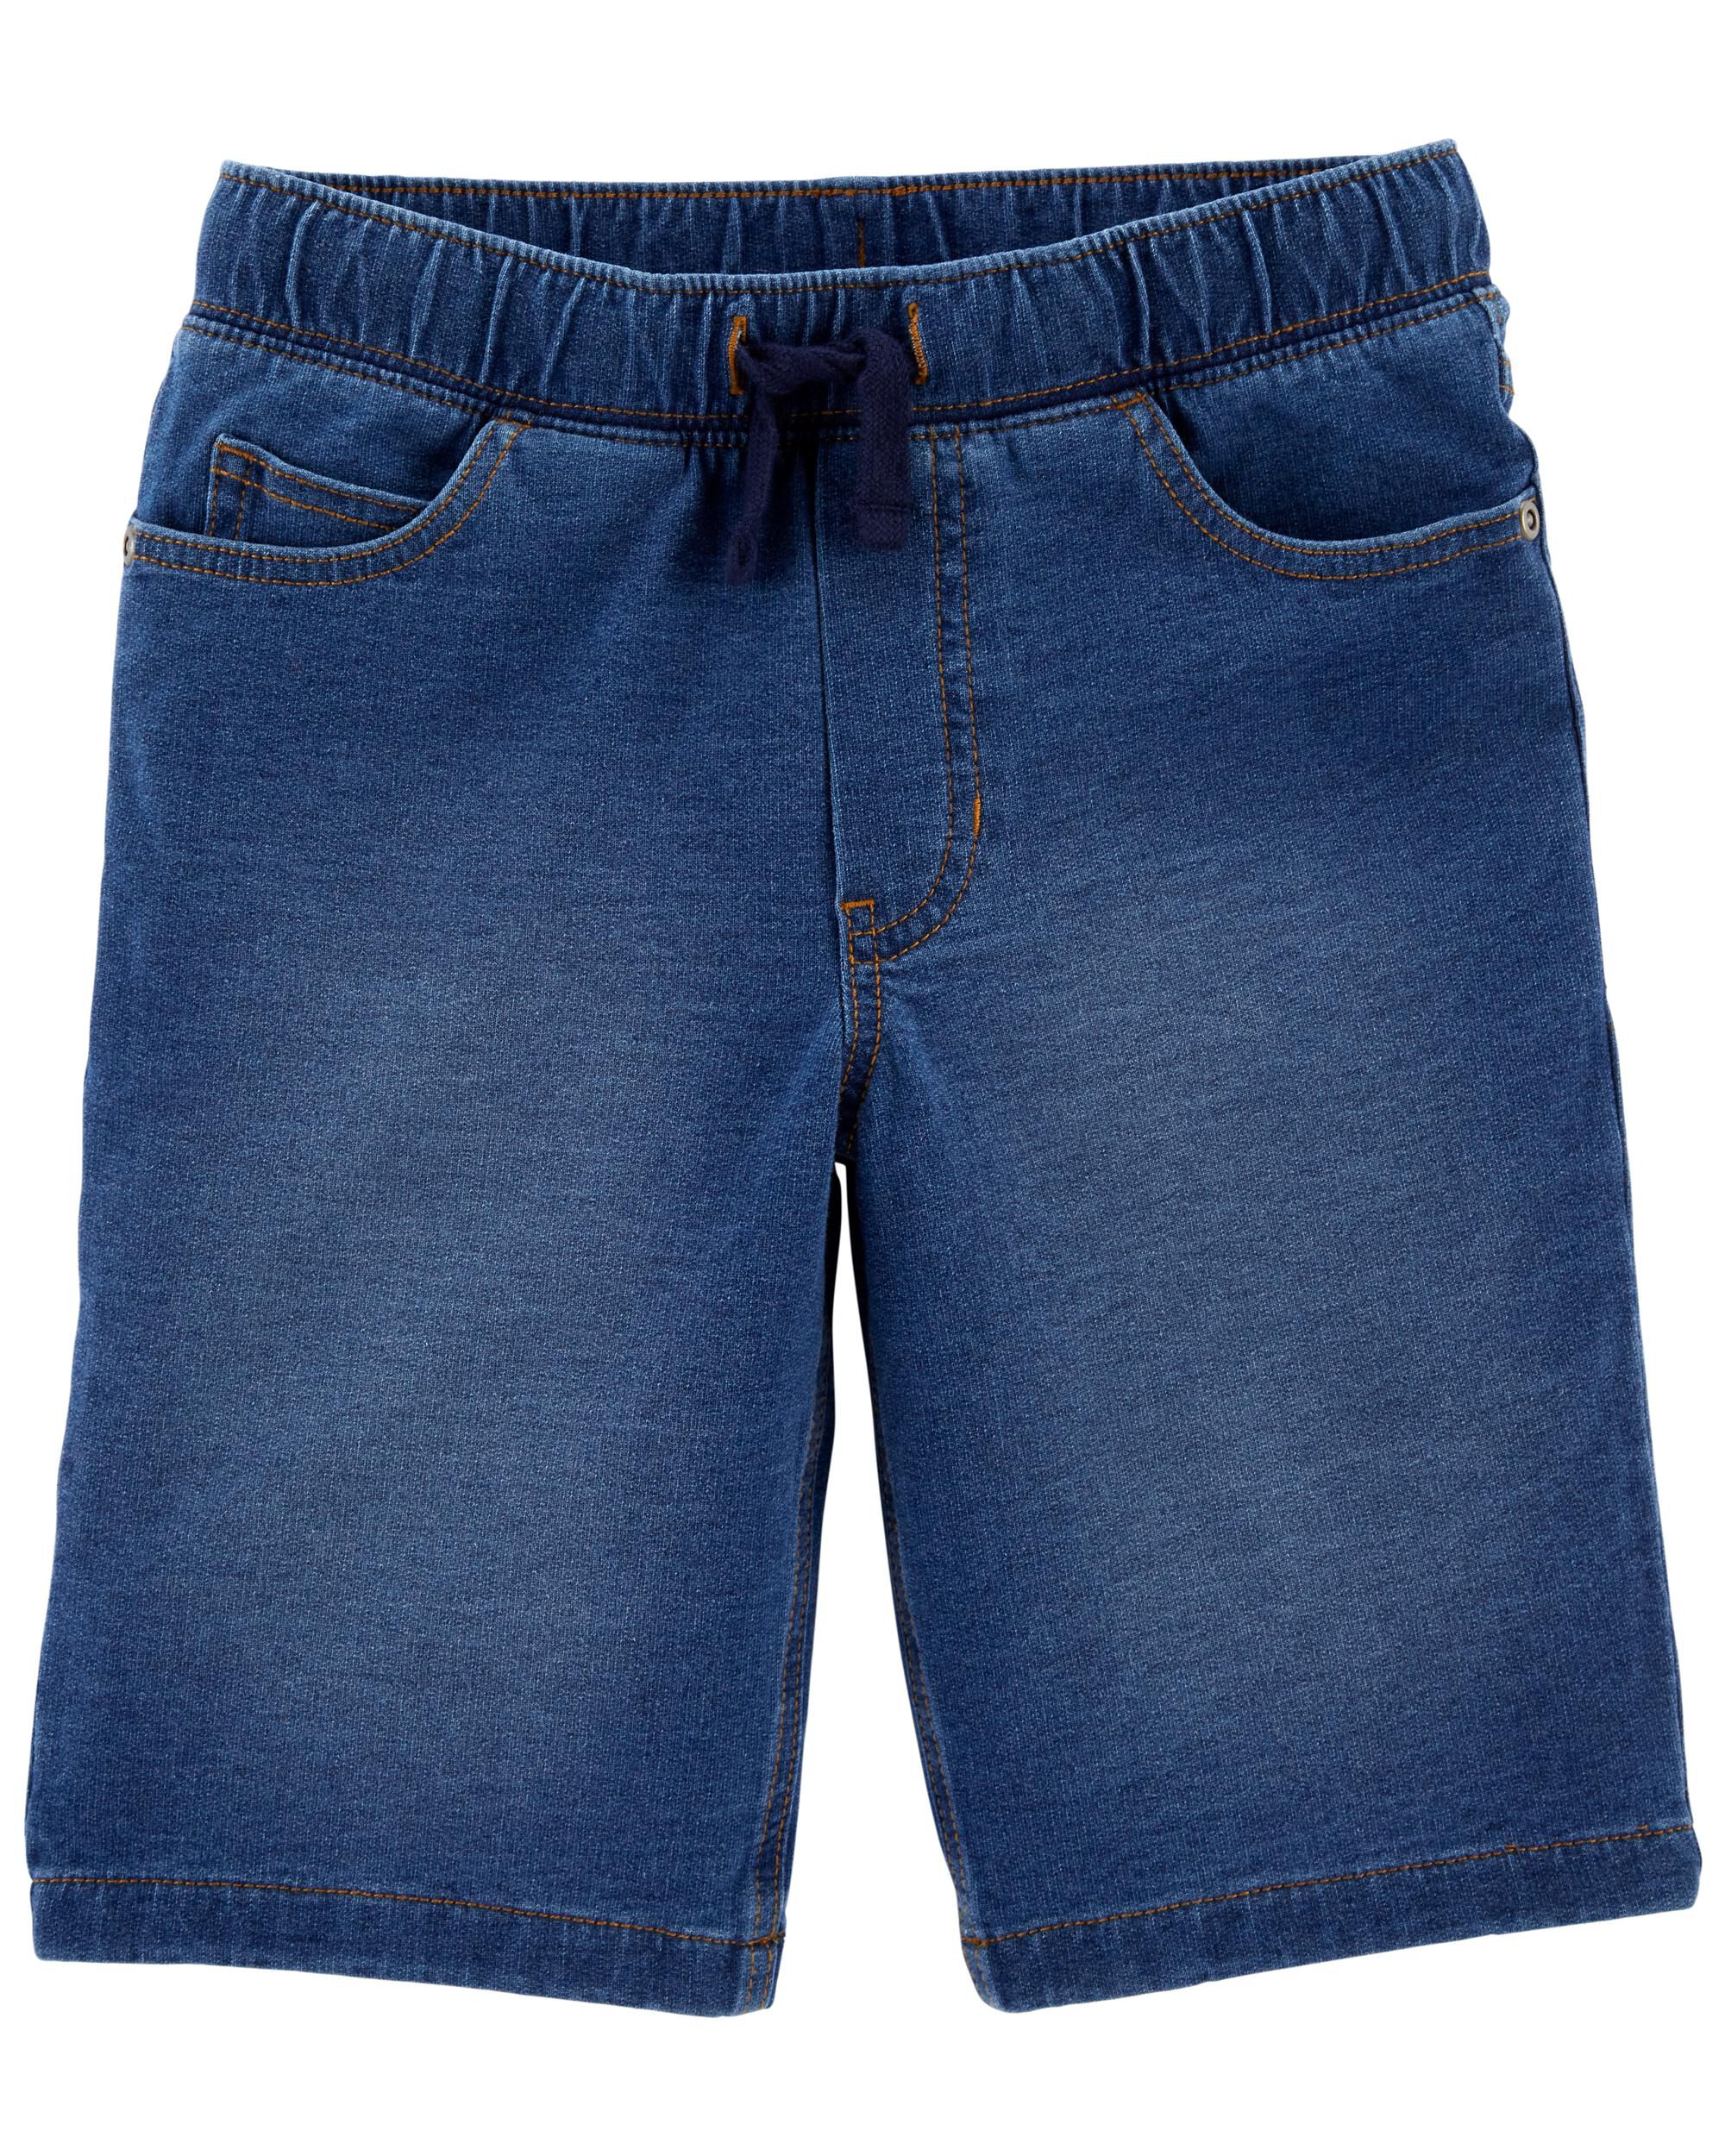 Easy Pull-On Denim Shorts 